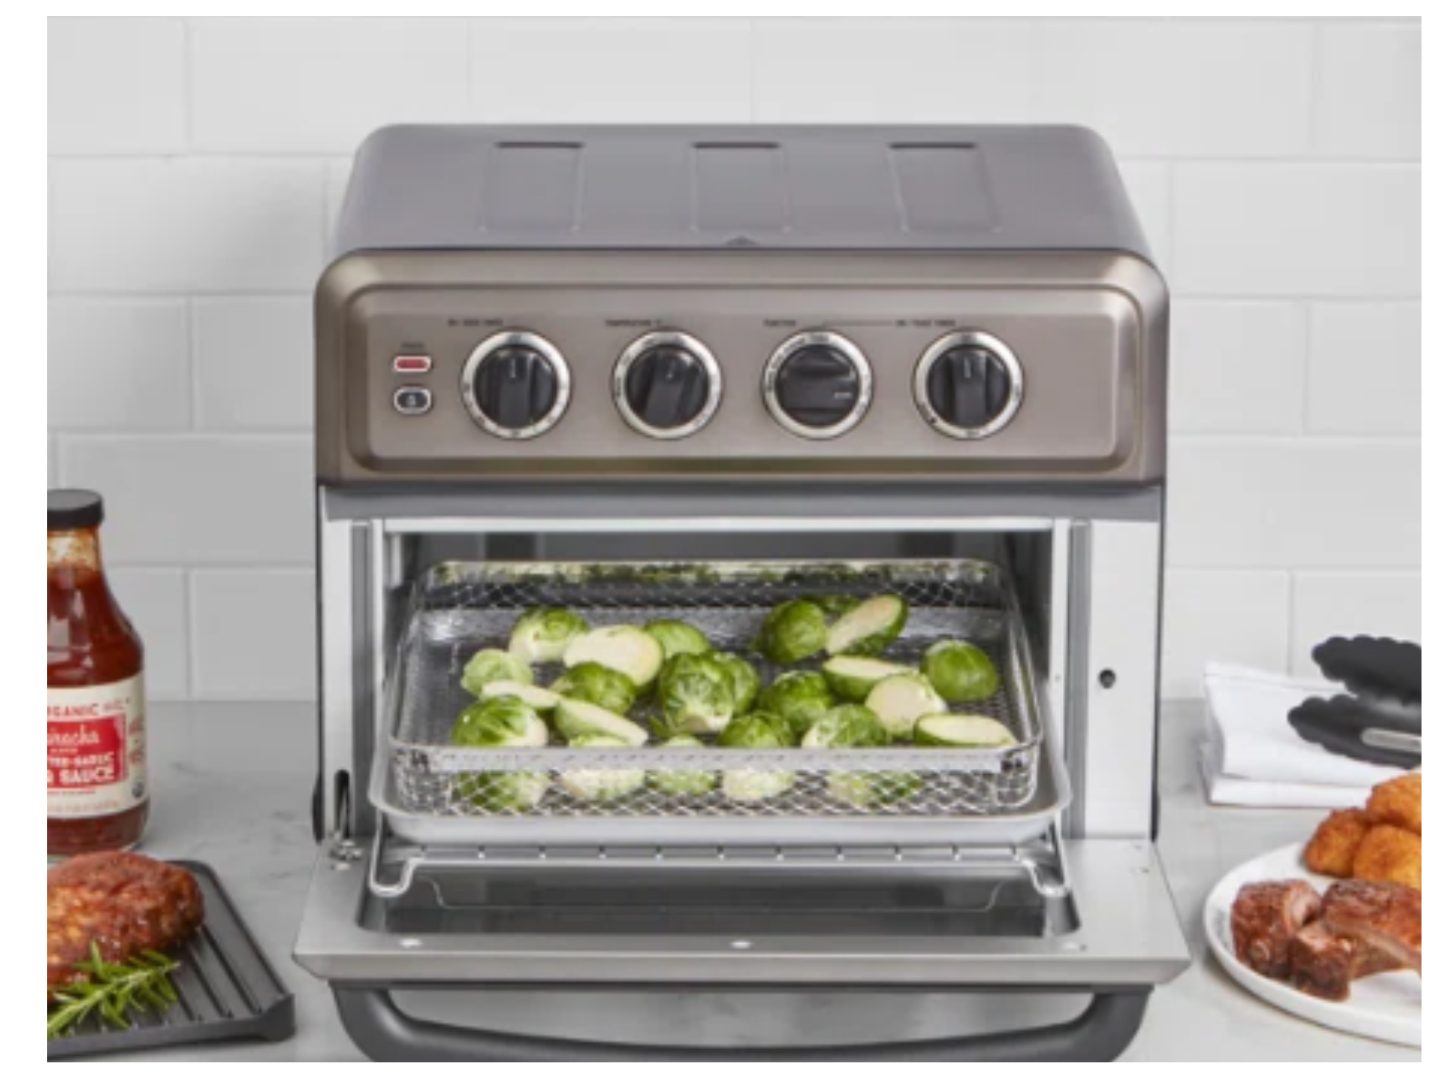 Oster French Door vs Cuisinart TOA-60 Air Fryer Toaster Oven